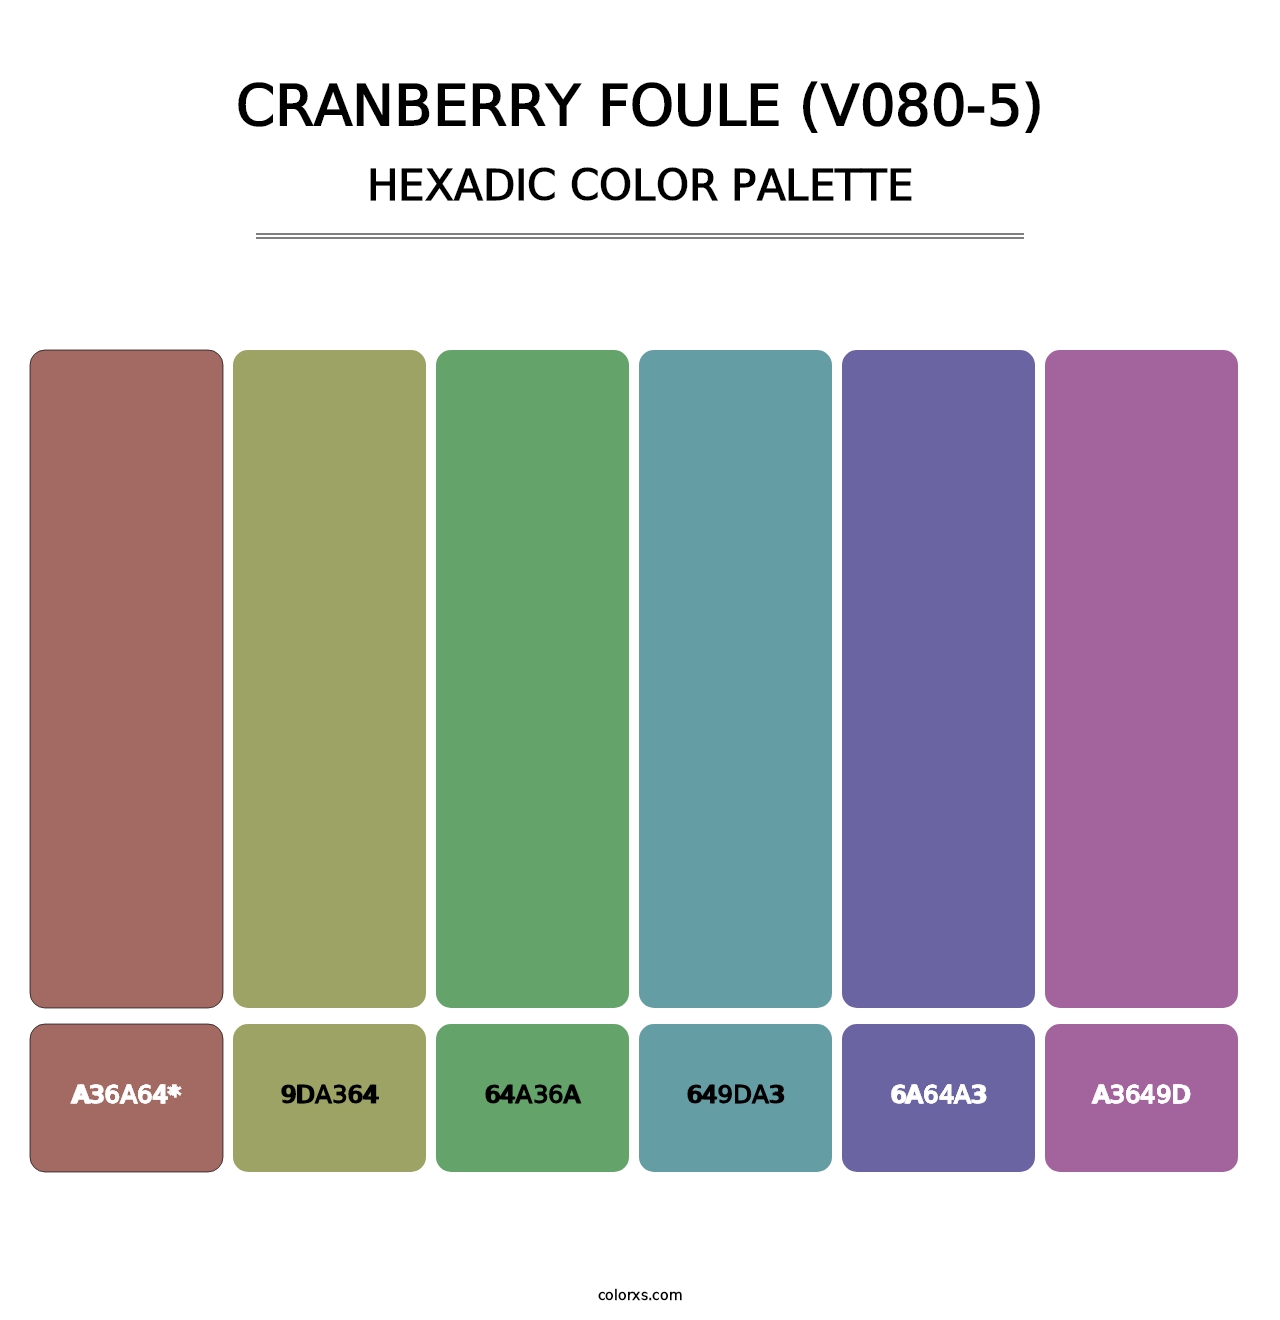 Cranberry Foule (V080-5) - Hexadic Color Palette